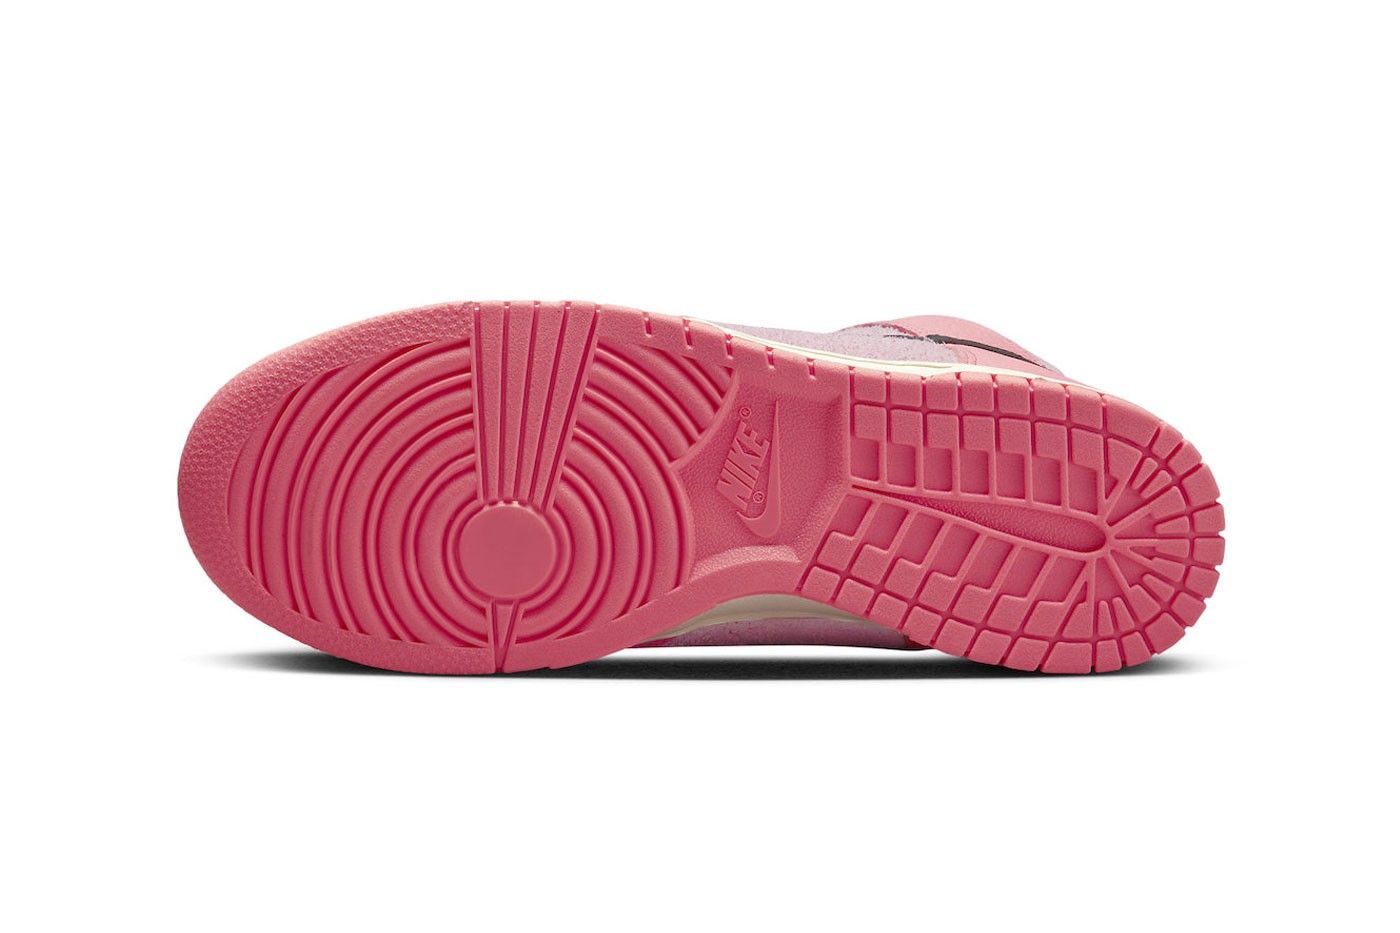 Nike Merilis Sneaker Seri Dunk High Warna Ungu Pink Gemas!